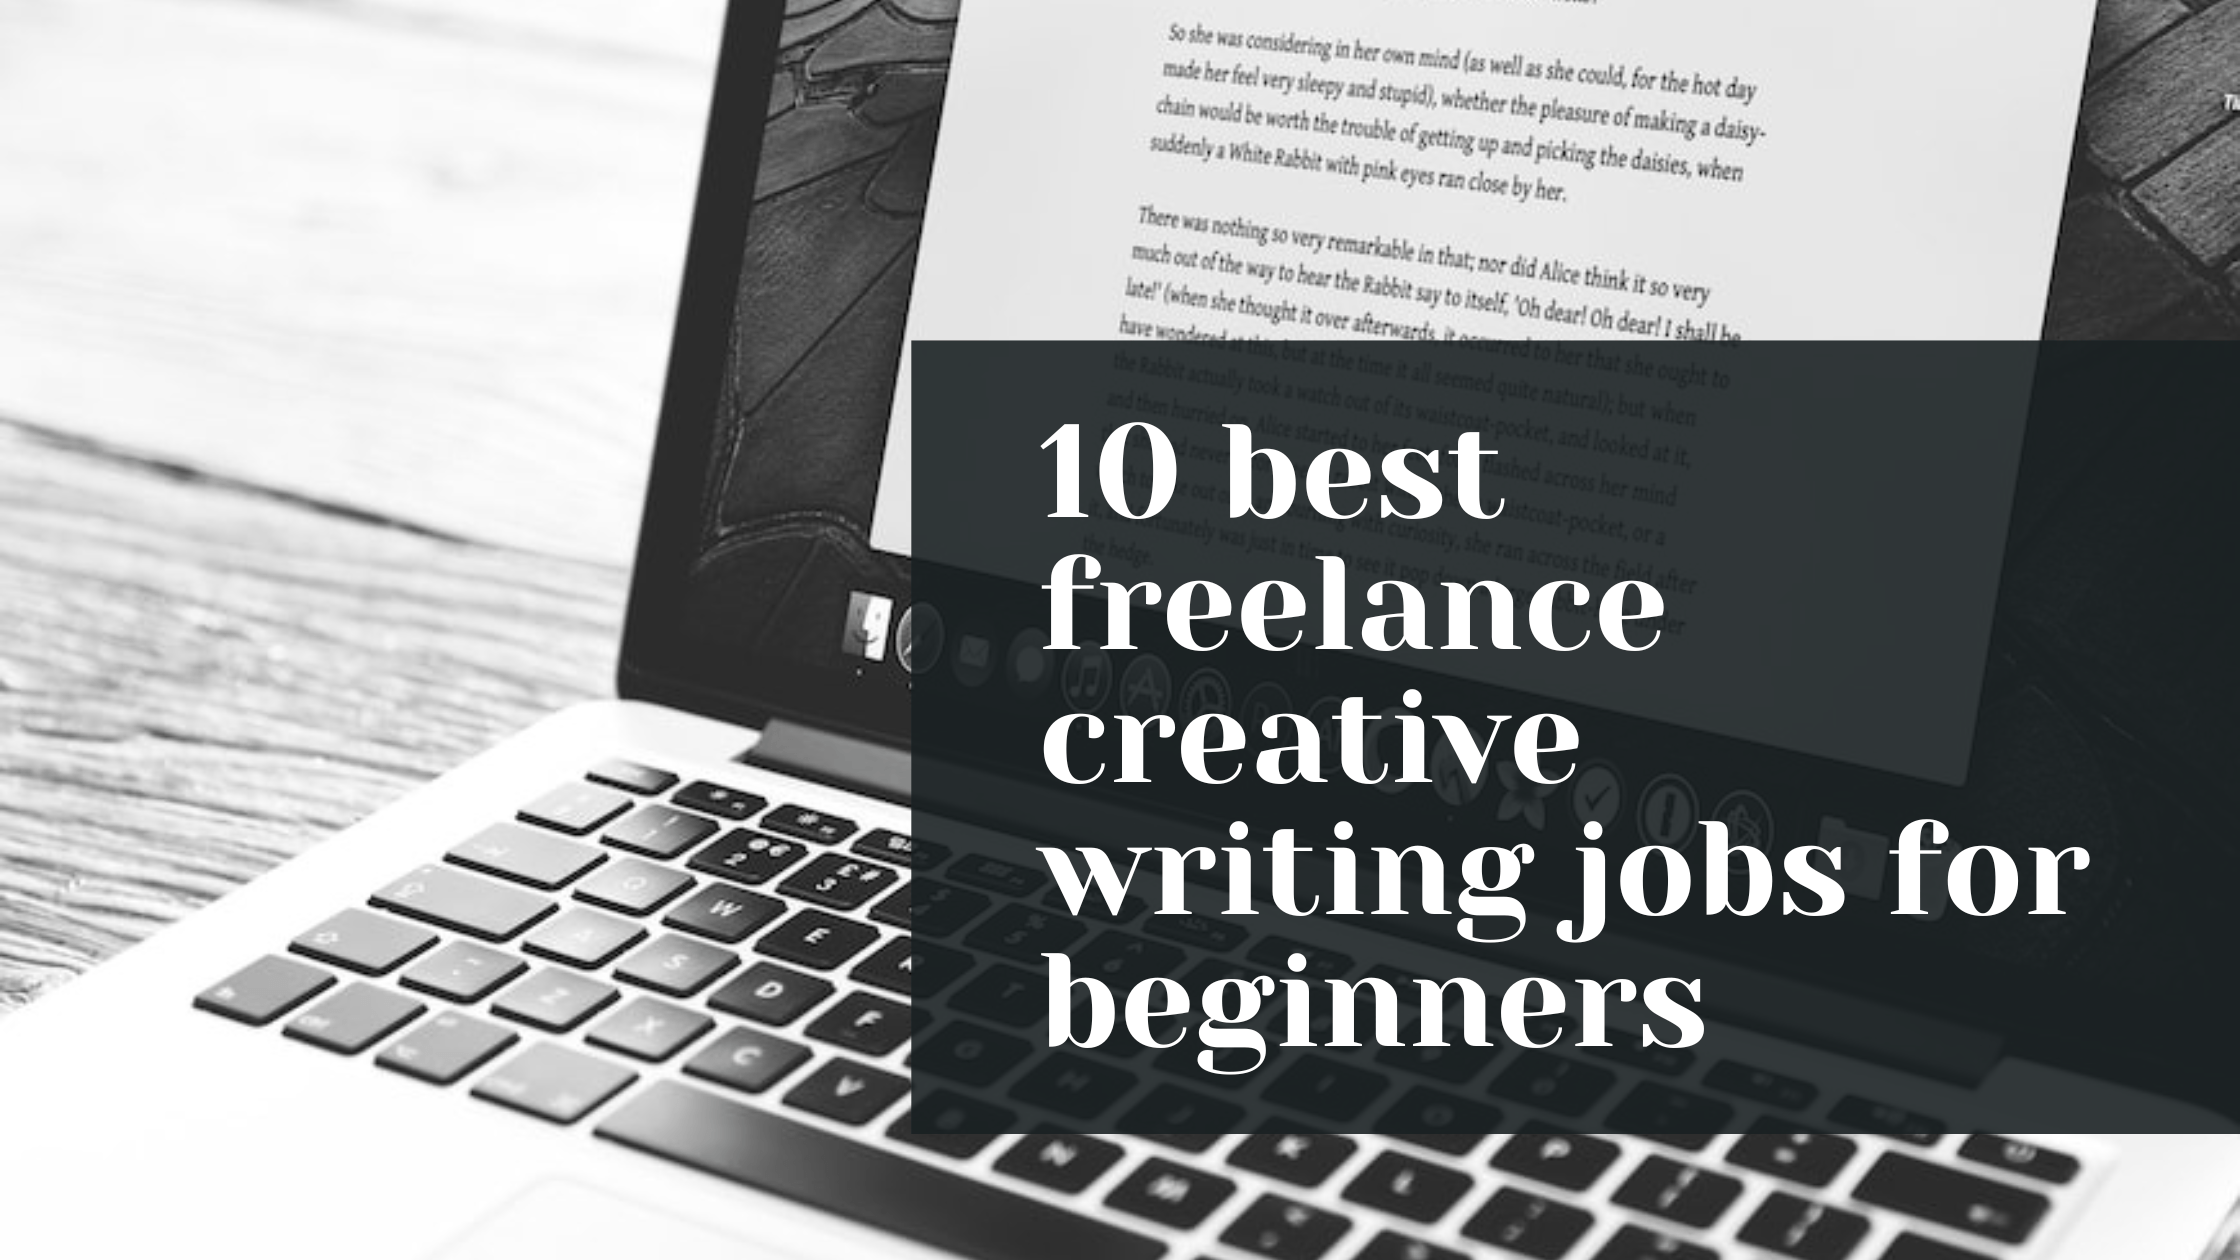 Freelance Creative Writing Jobs For Beginners